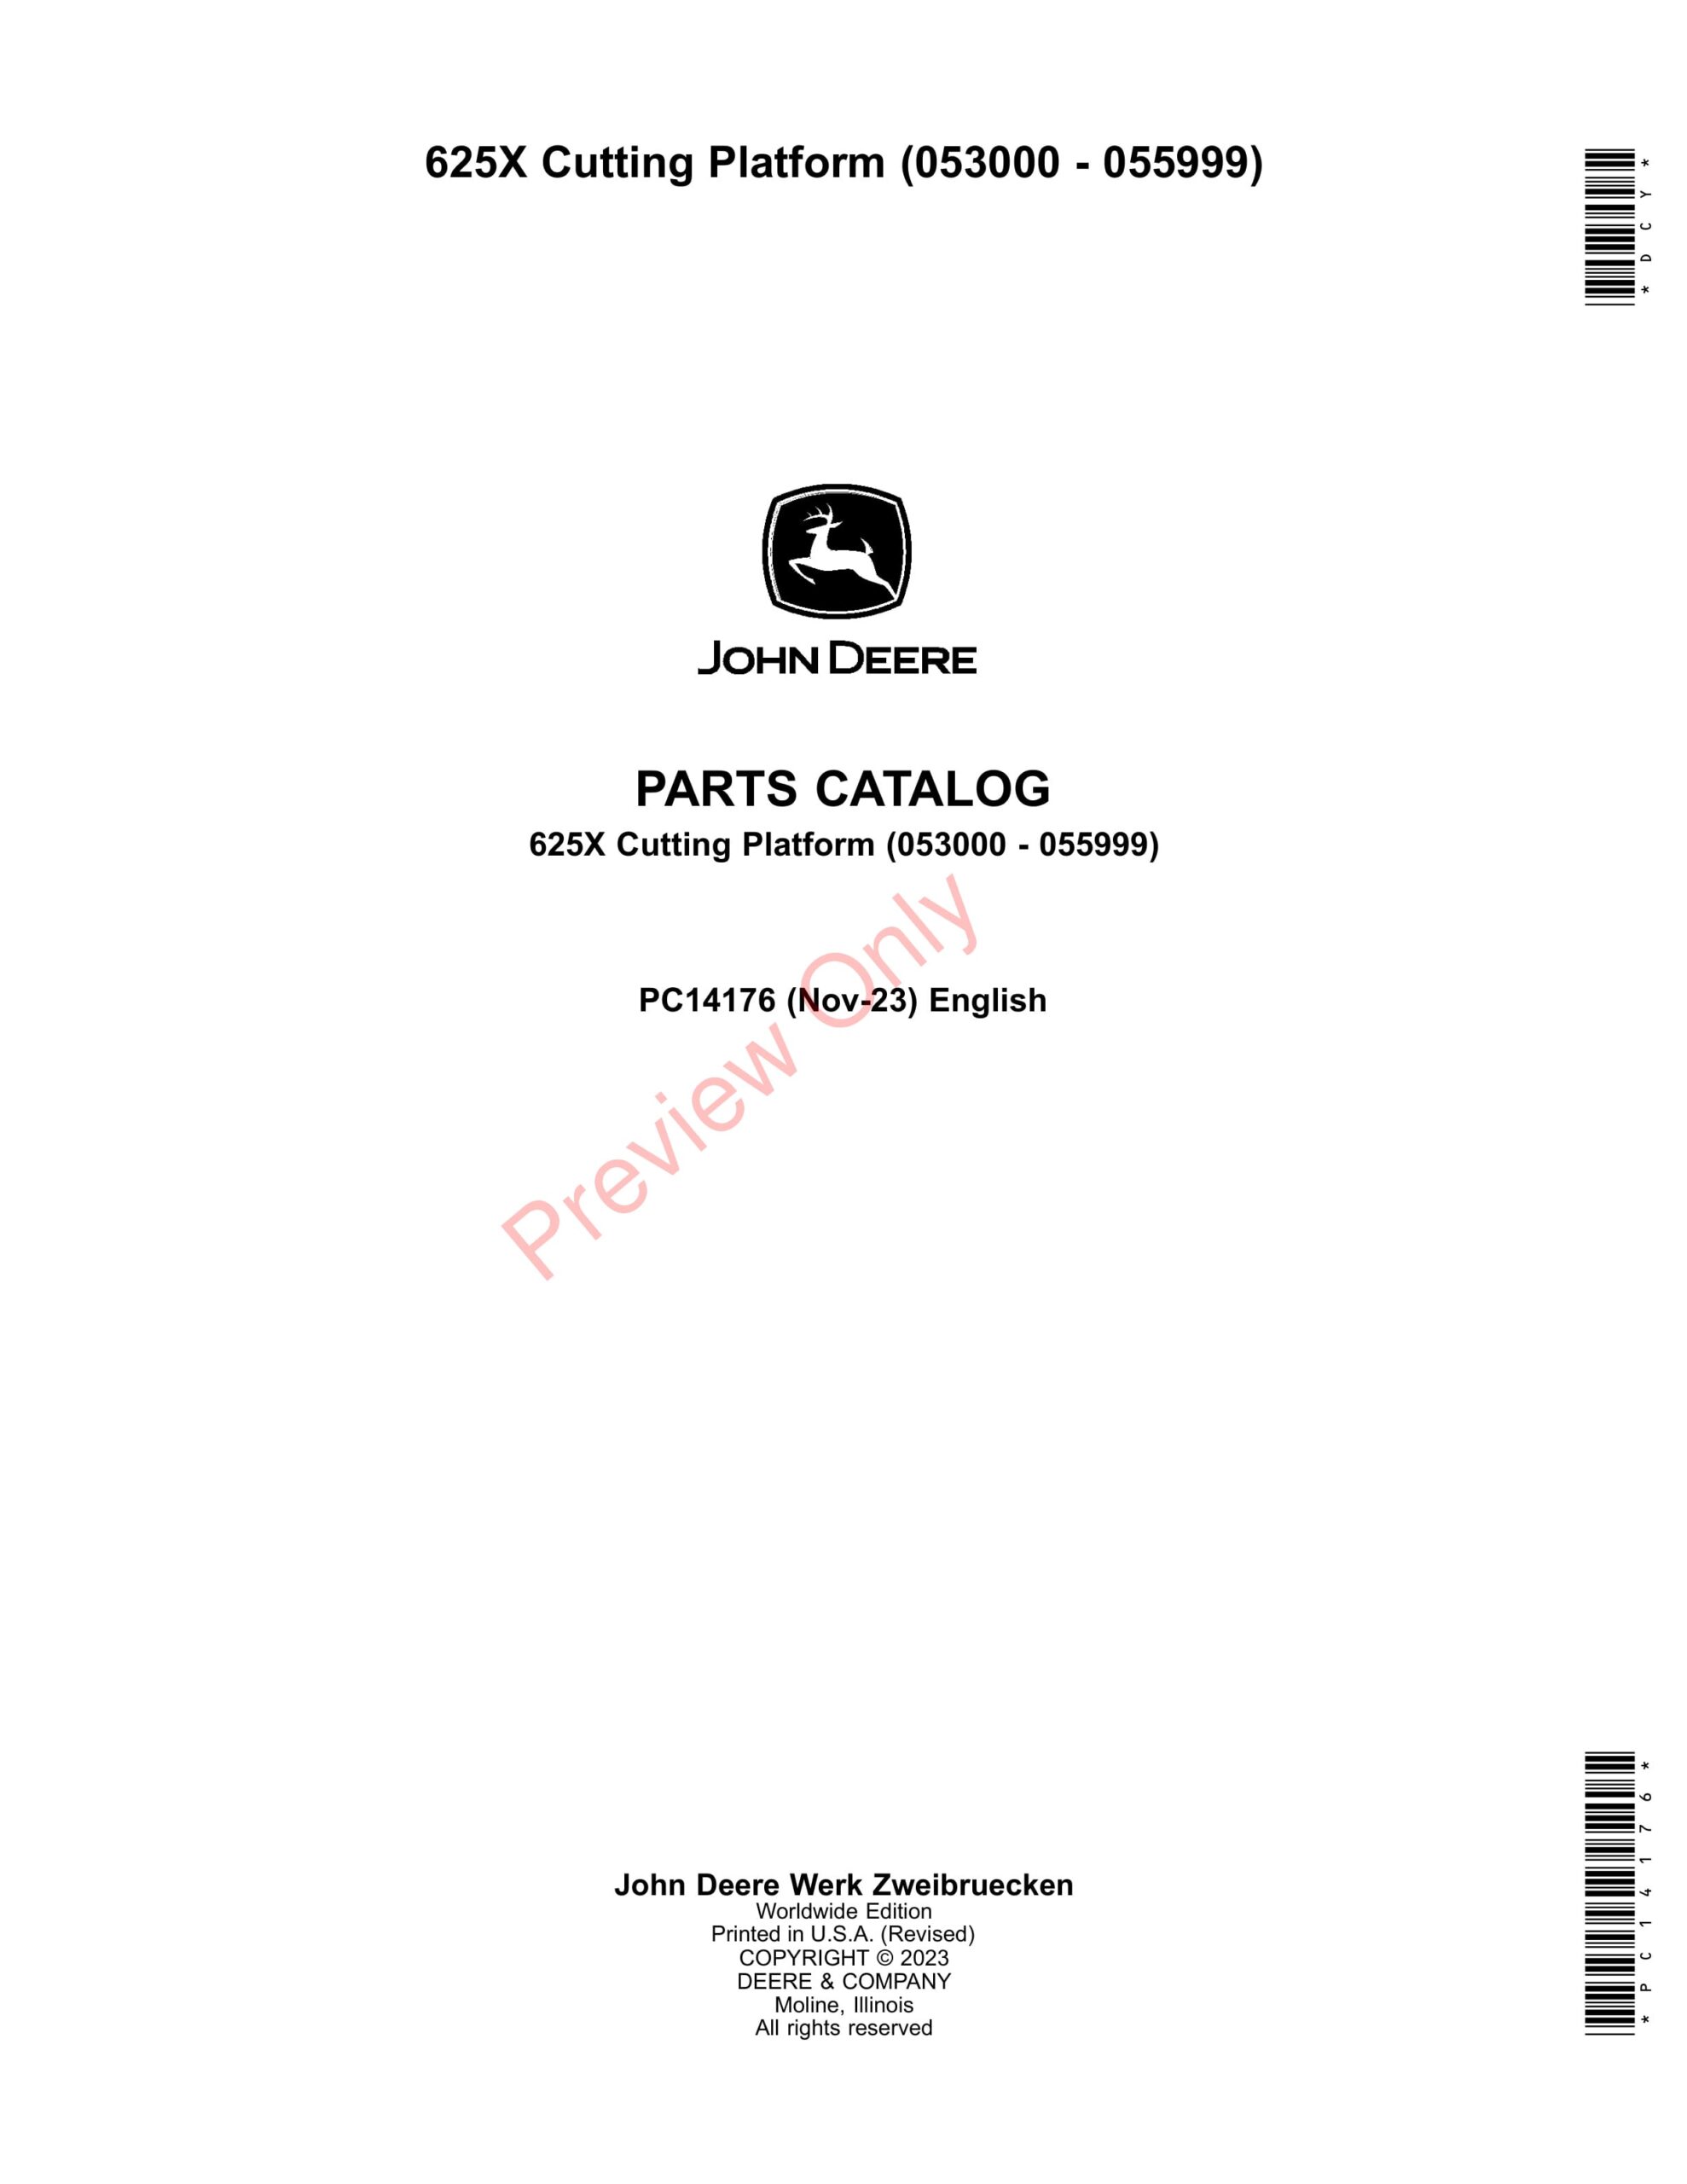 John Deere 625X Cutting Platform (053000 – 055999) Parts Catalog PC14176 12APR22-1